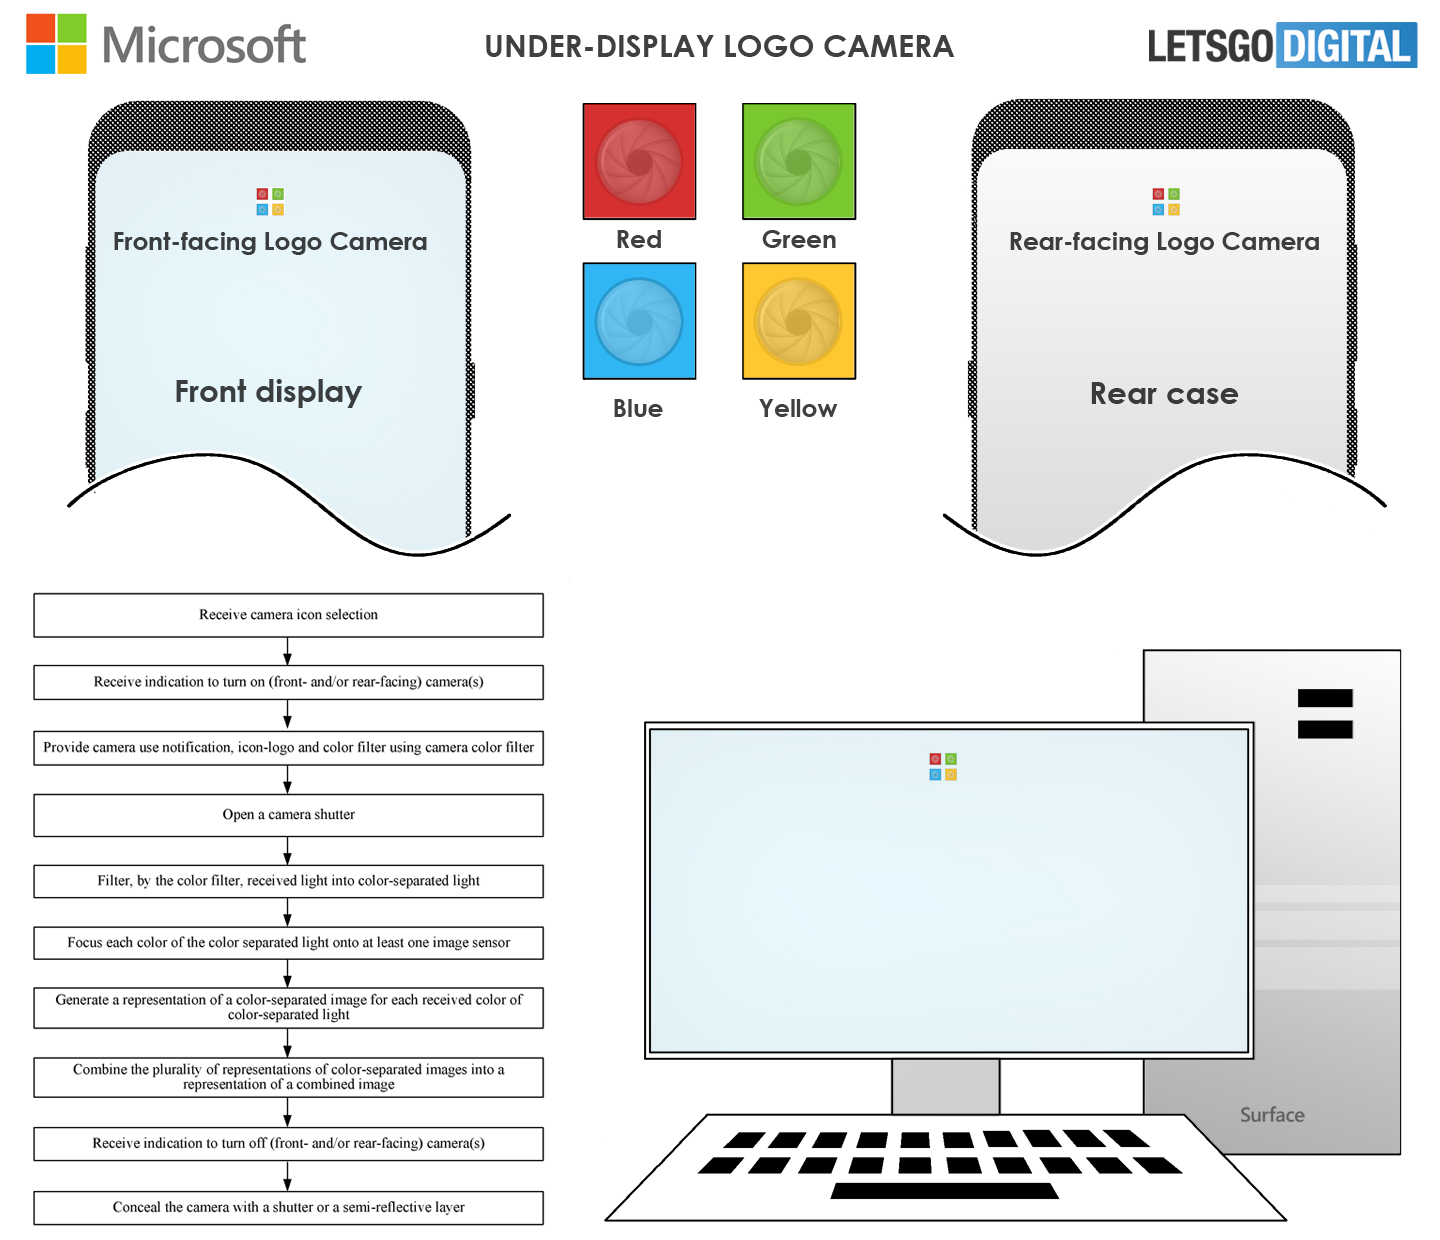 Microsoft Surface under-screen logo camera